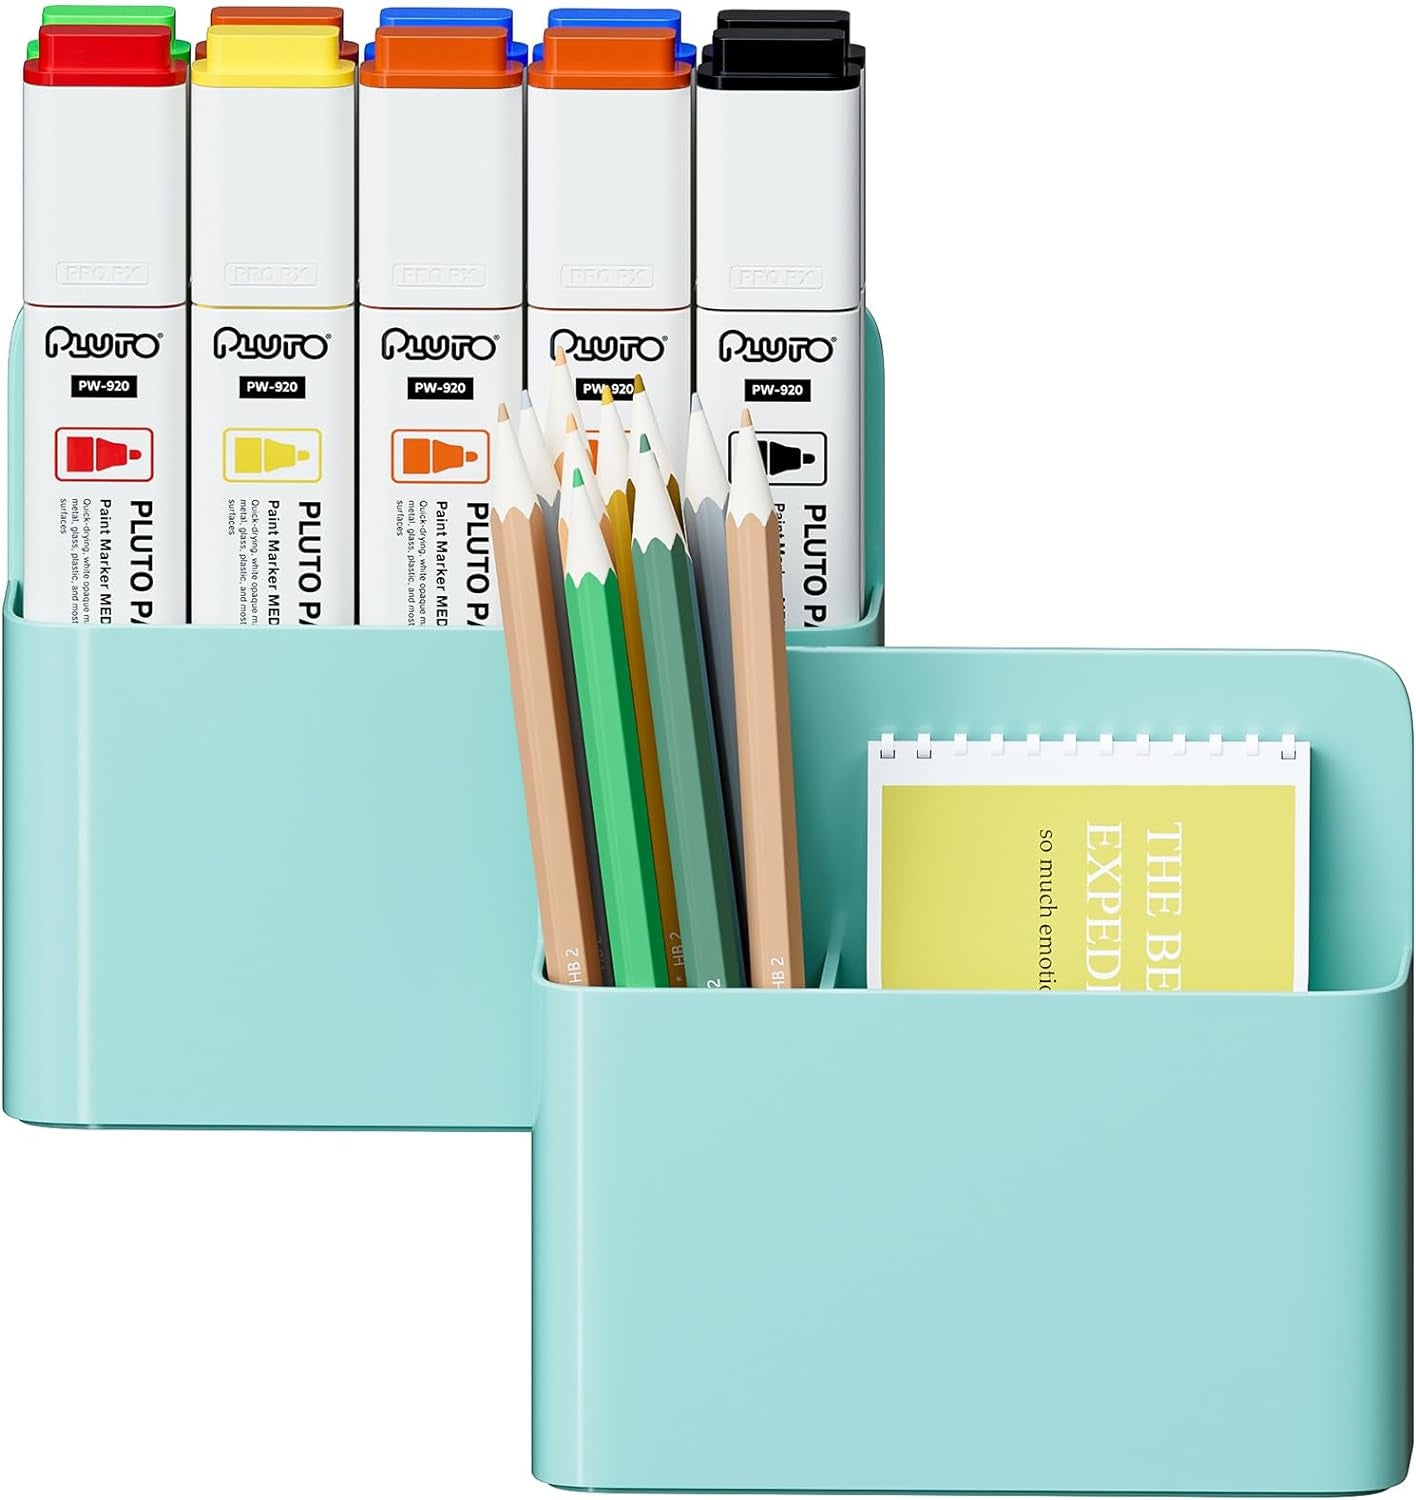 Magnetic Dry Erase Marker Holder,Pen and Eraser Holder for Whiteboard，Magnet Pencil Cup Utility Storage Organizer for Office, Refrigerator, Locker and Metal Cabinets (2 Pack)